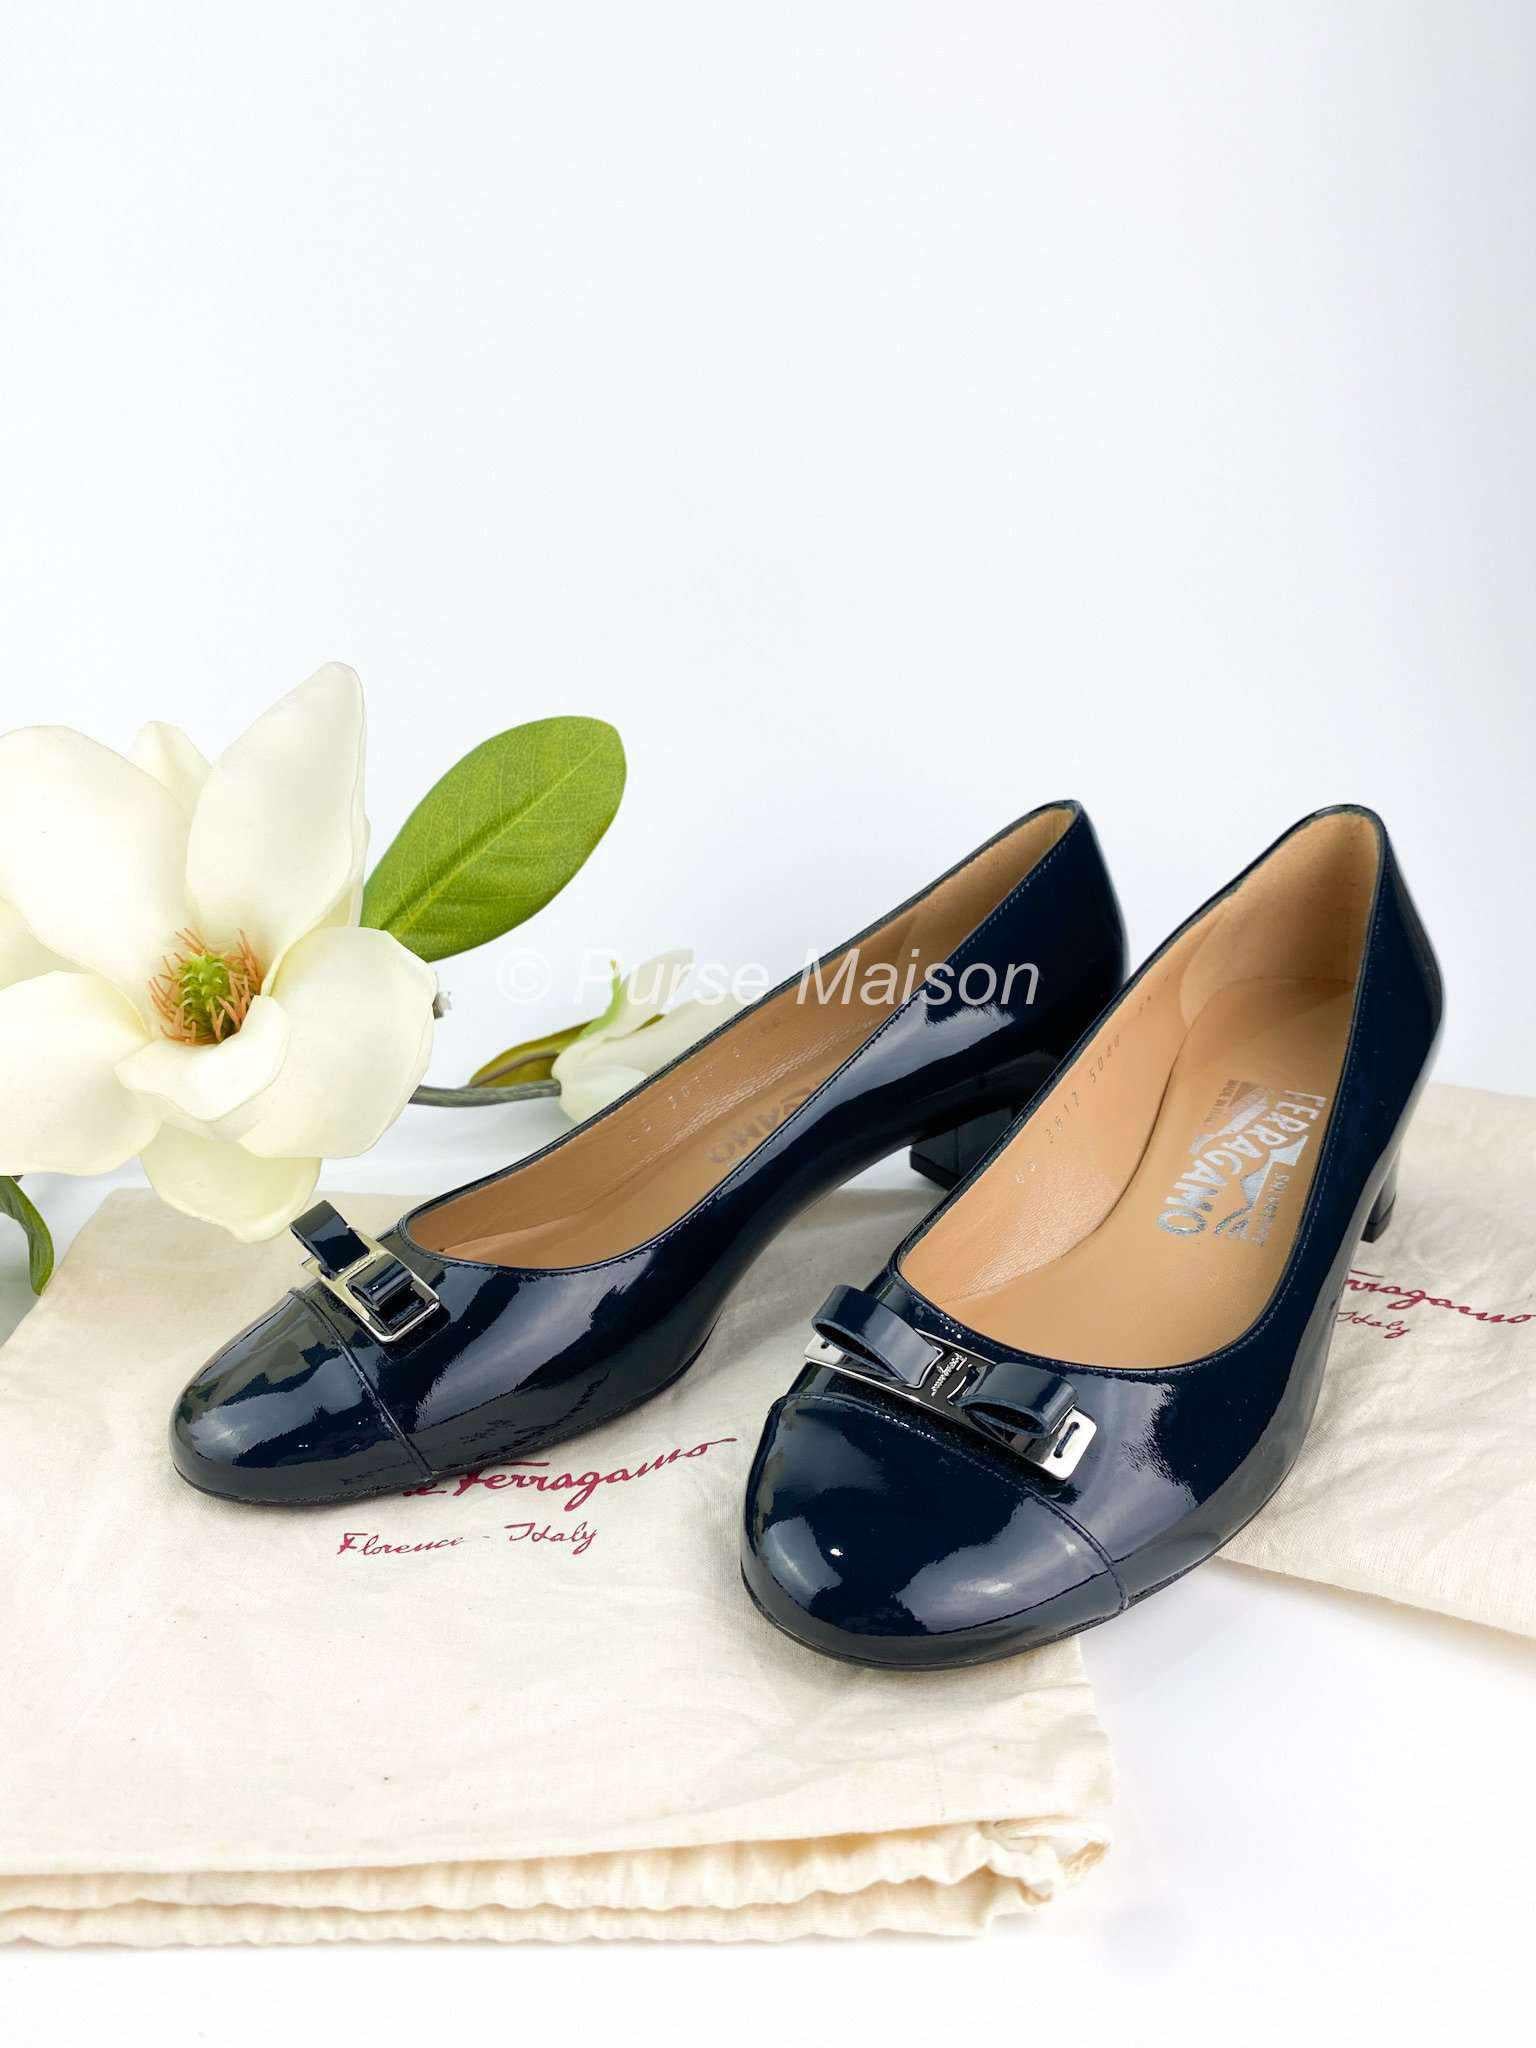 Salvatore Ferragamo low block heel patent leather shoes size 5.5 US